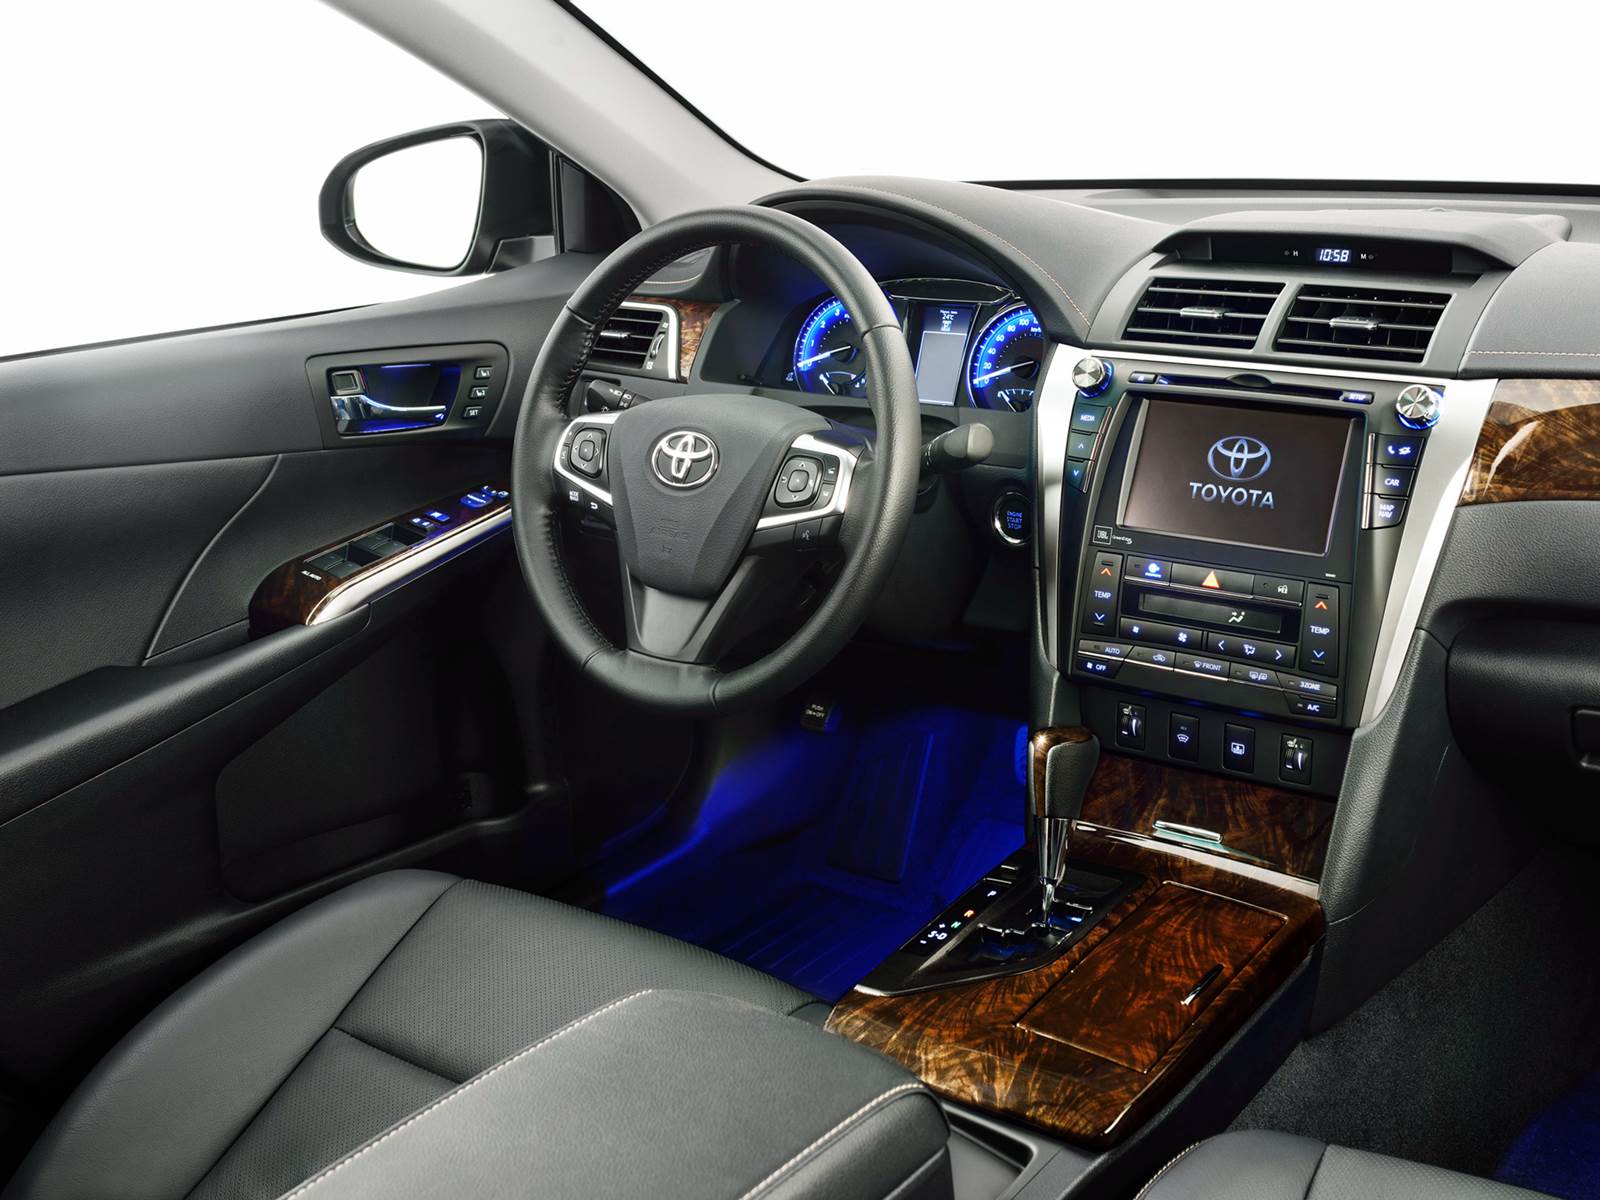 Toyota Camry 2015 - interior